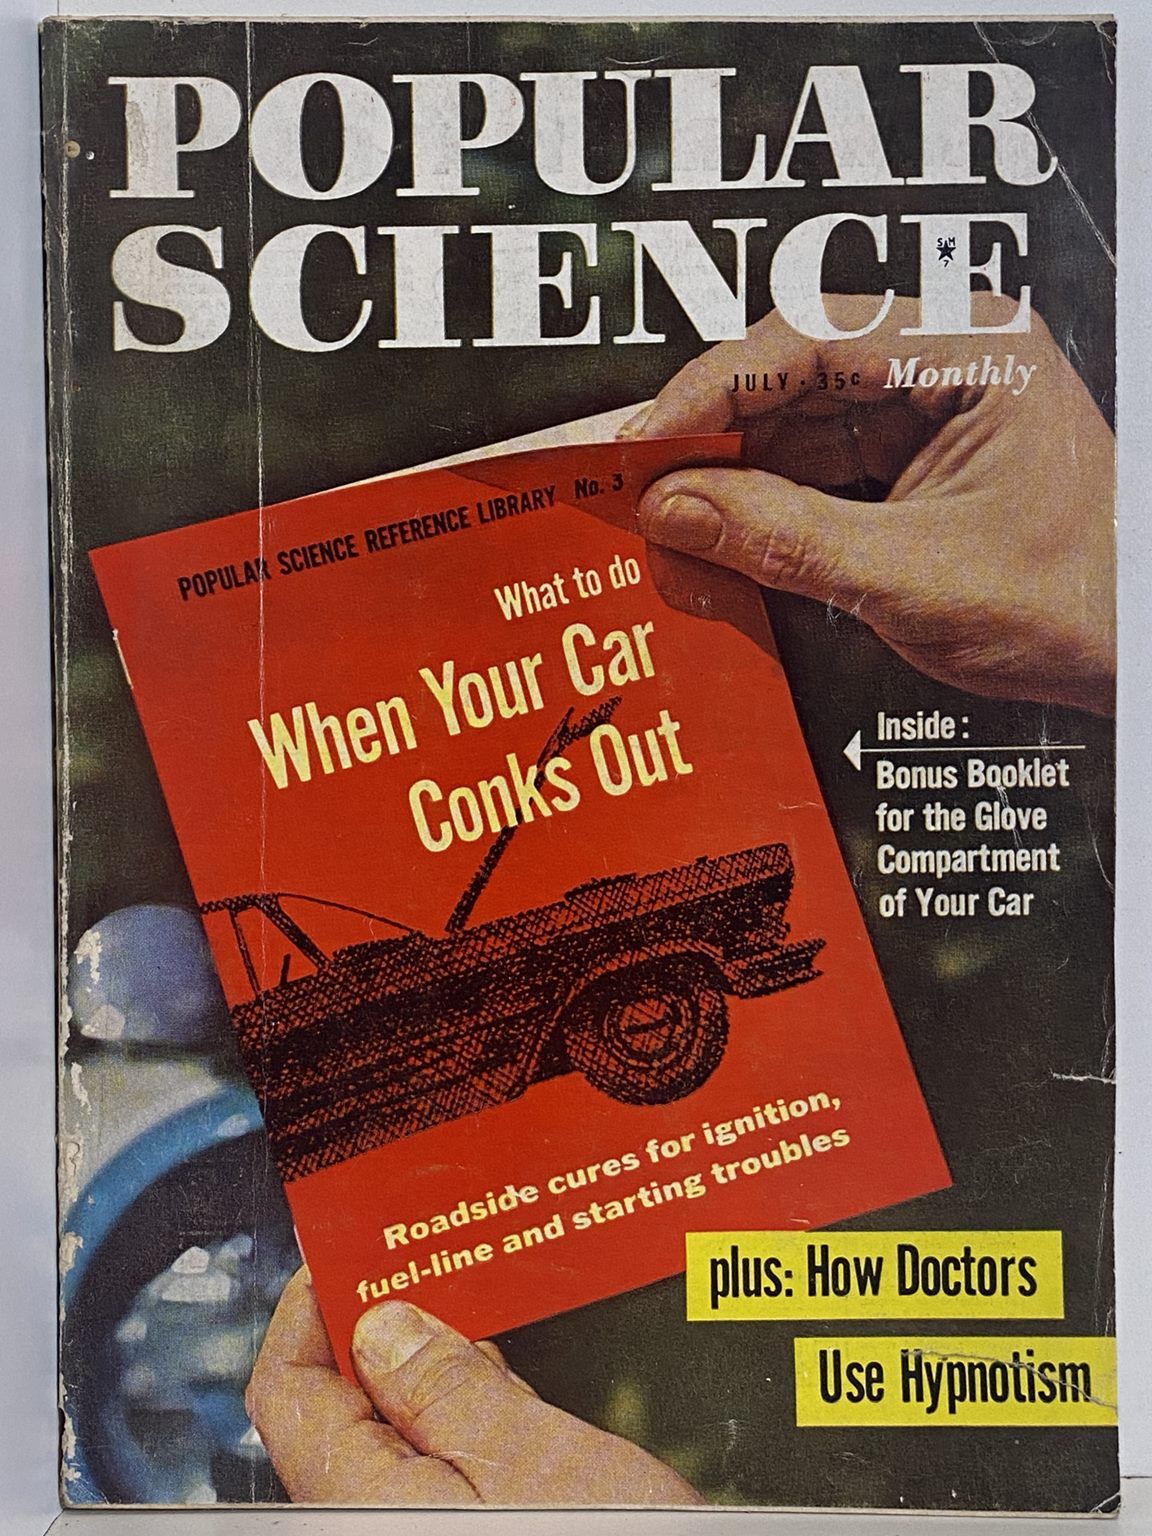 VINTAGE MAGAZINE: Popular Science, Vol. 171, No. 1 - July 1957